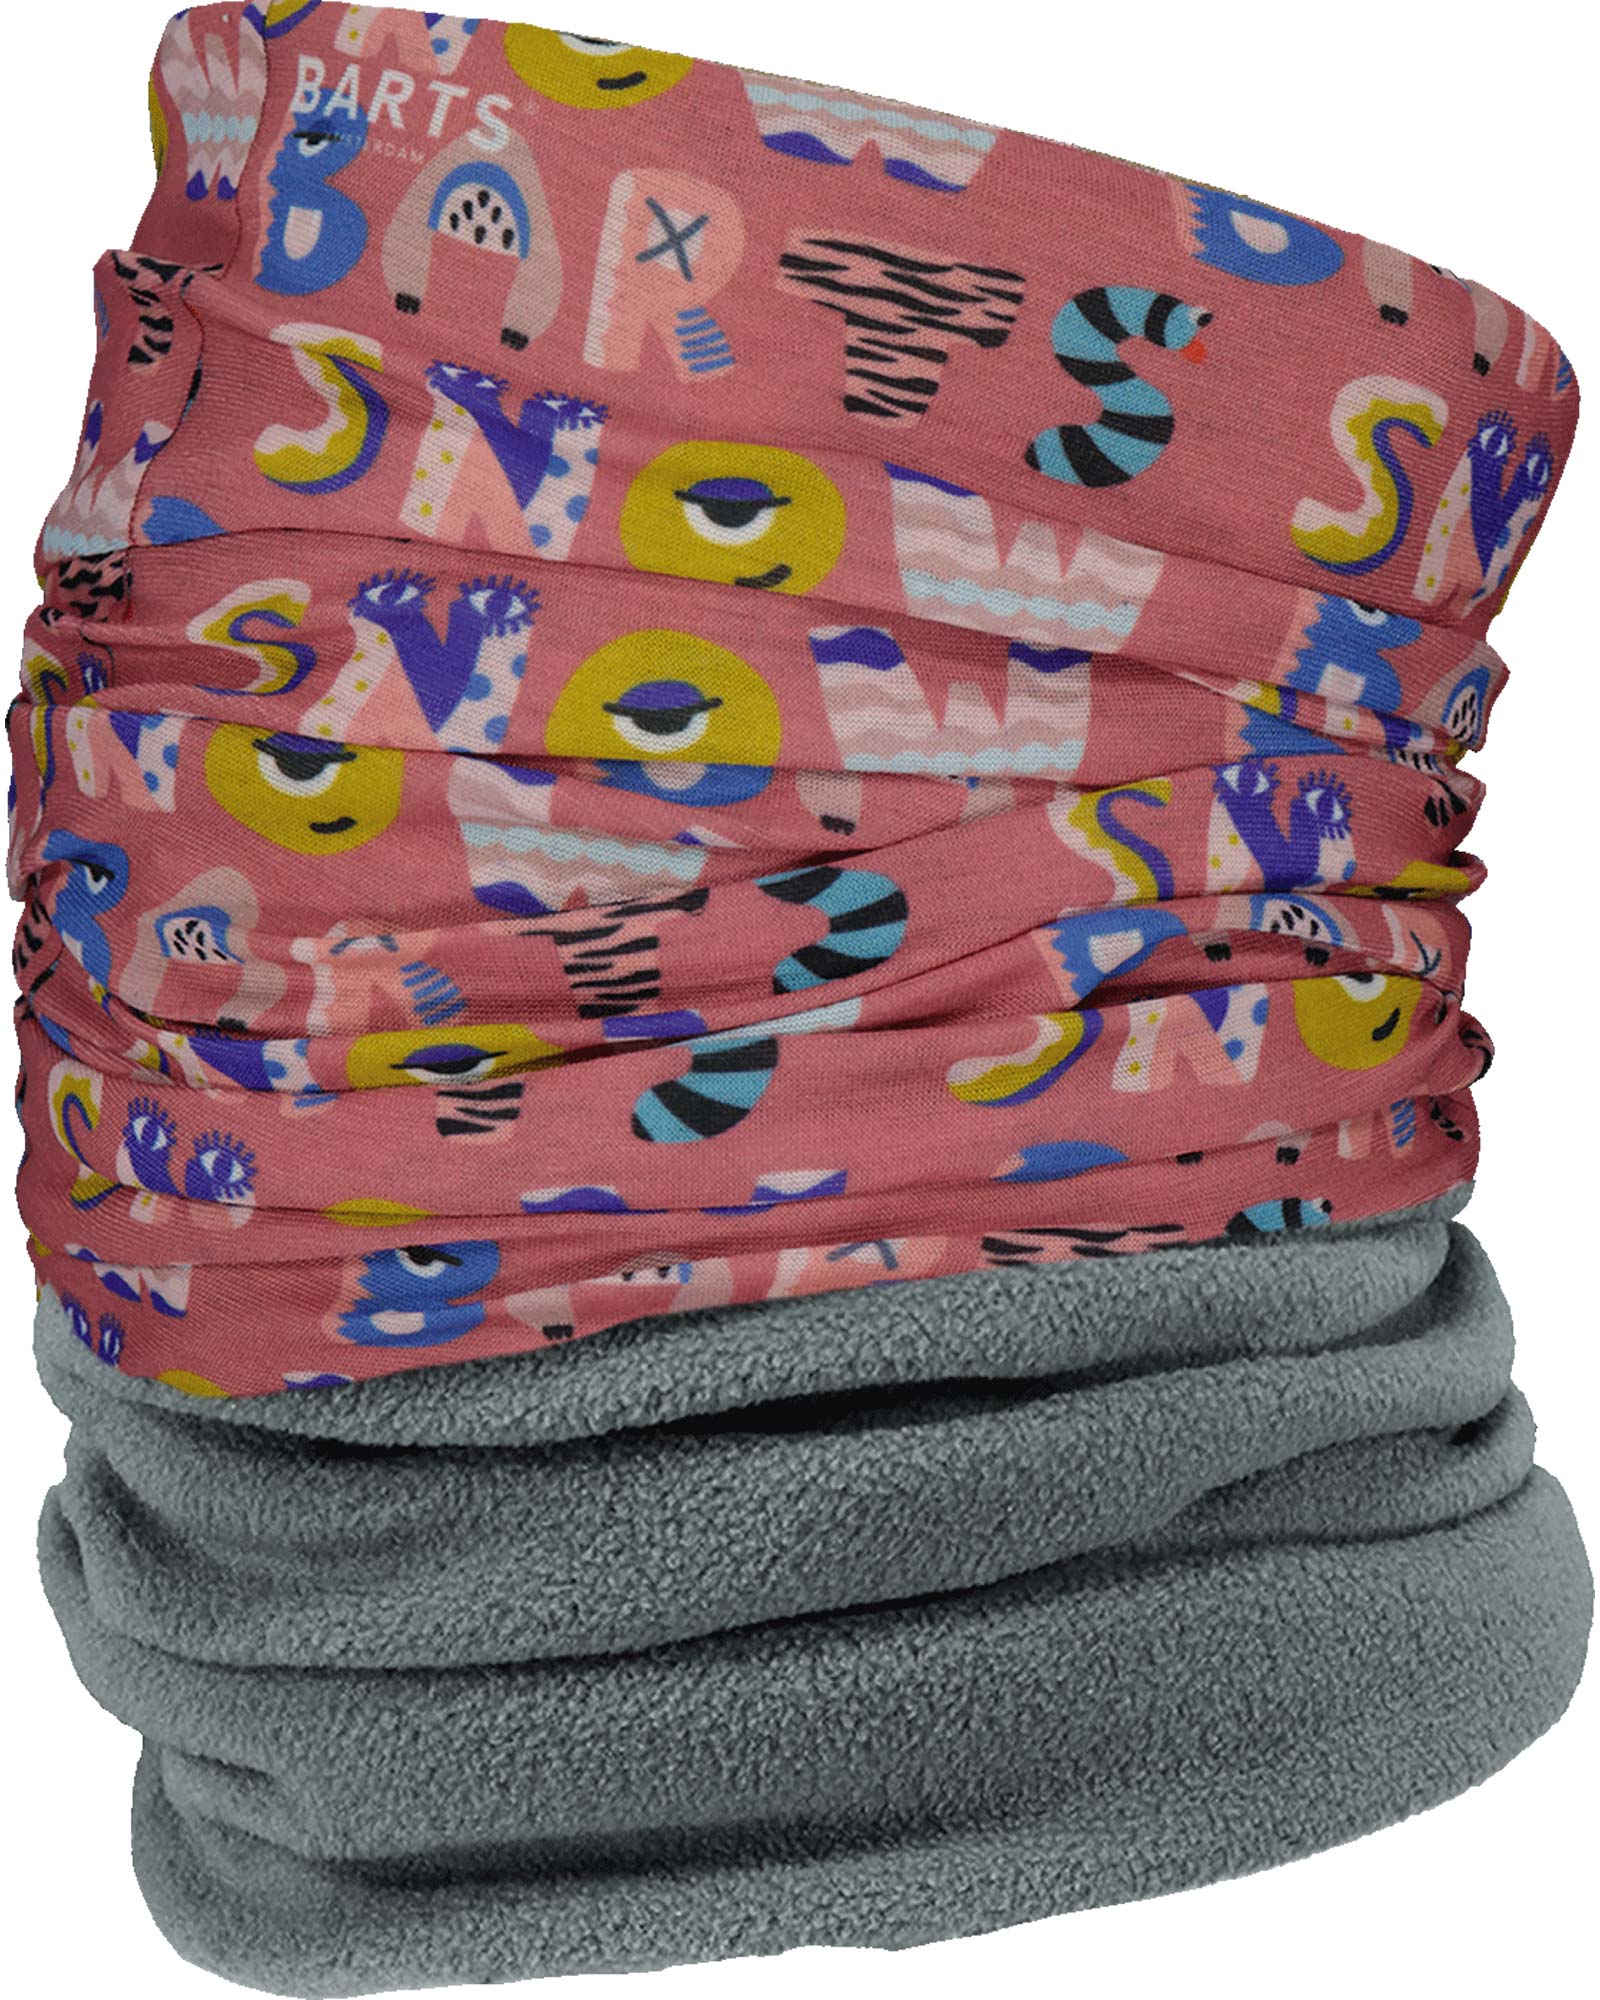 Barts Kids’ Snow Multicol Polar Neck Warmer - Pink Print